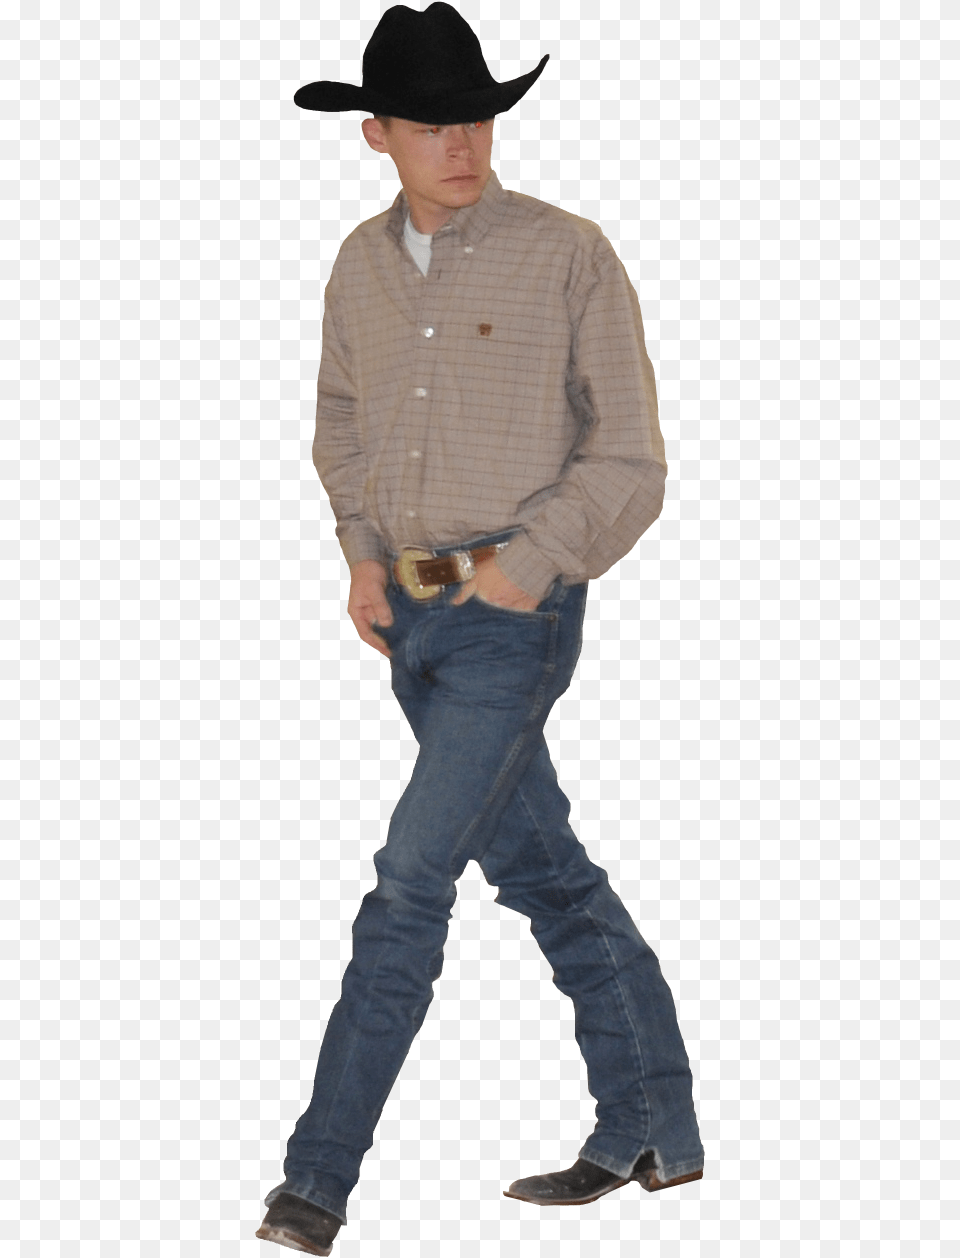 Download Cowboy For Free Cowboy Transparent, Jeans, Clothing, Pants, Hat Png Image